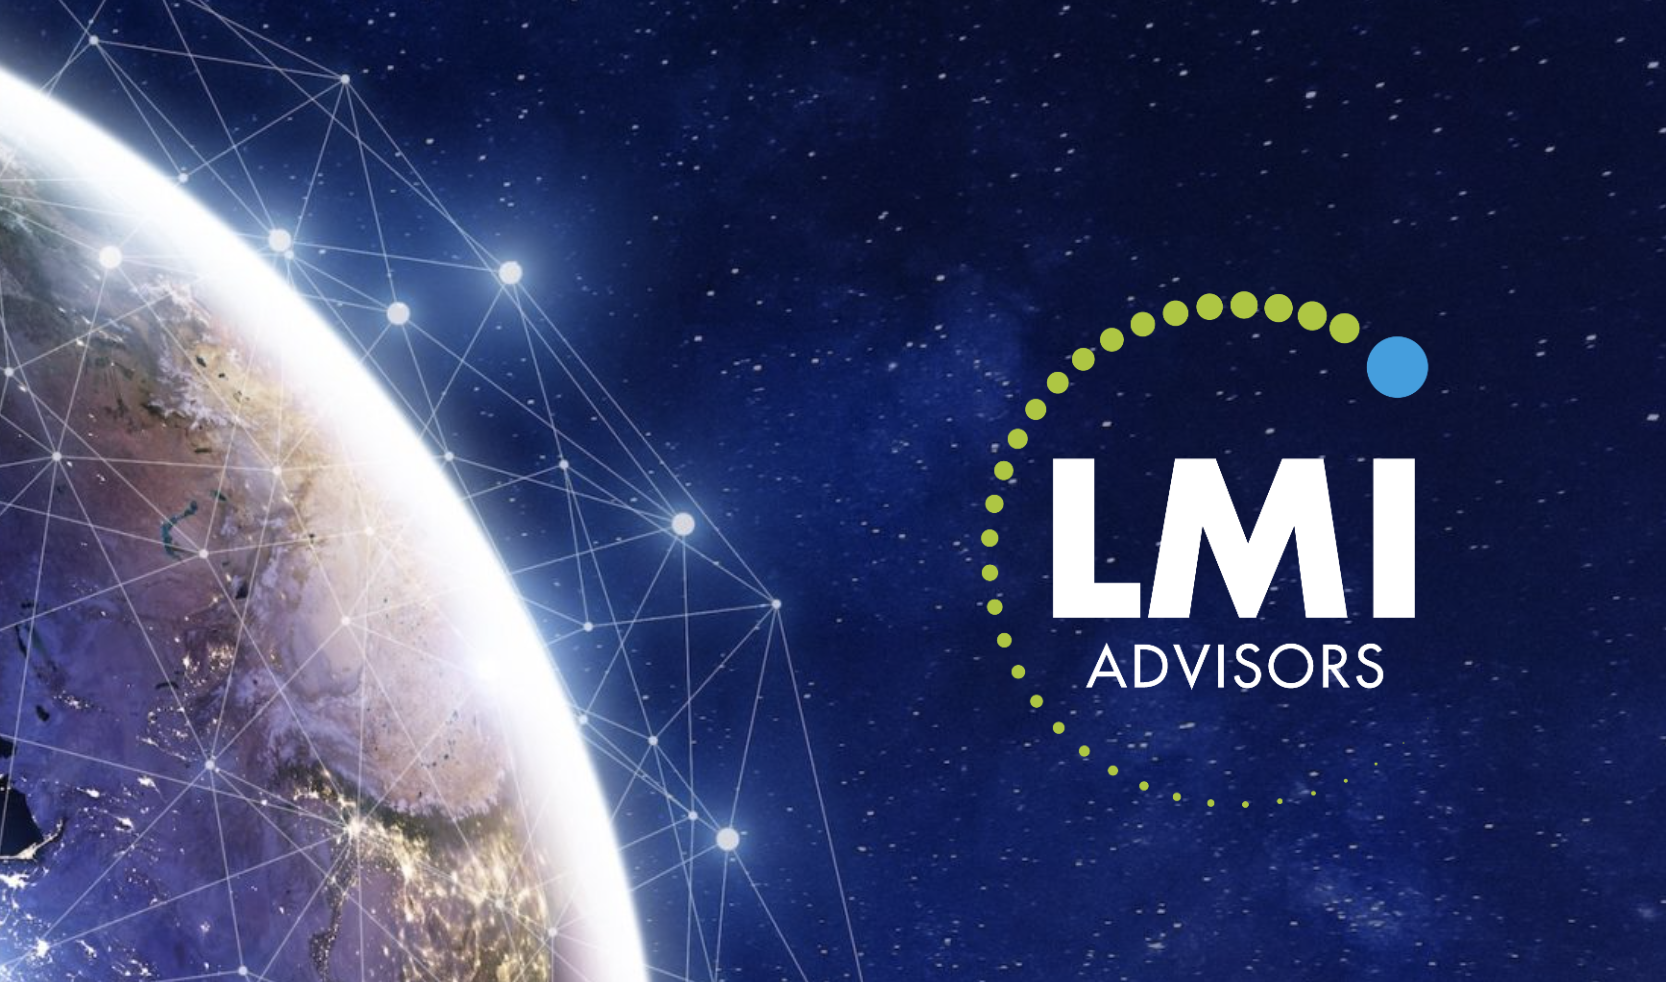 Home | LMI Advisors - International ICT & Satellite Law, Regulation ...